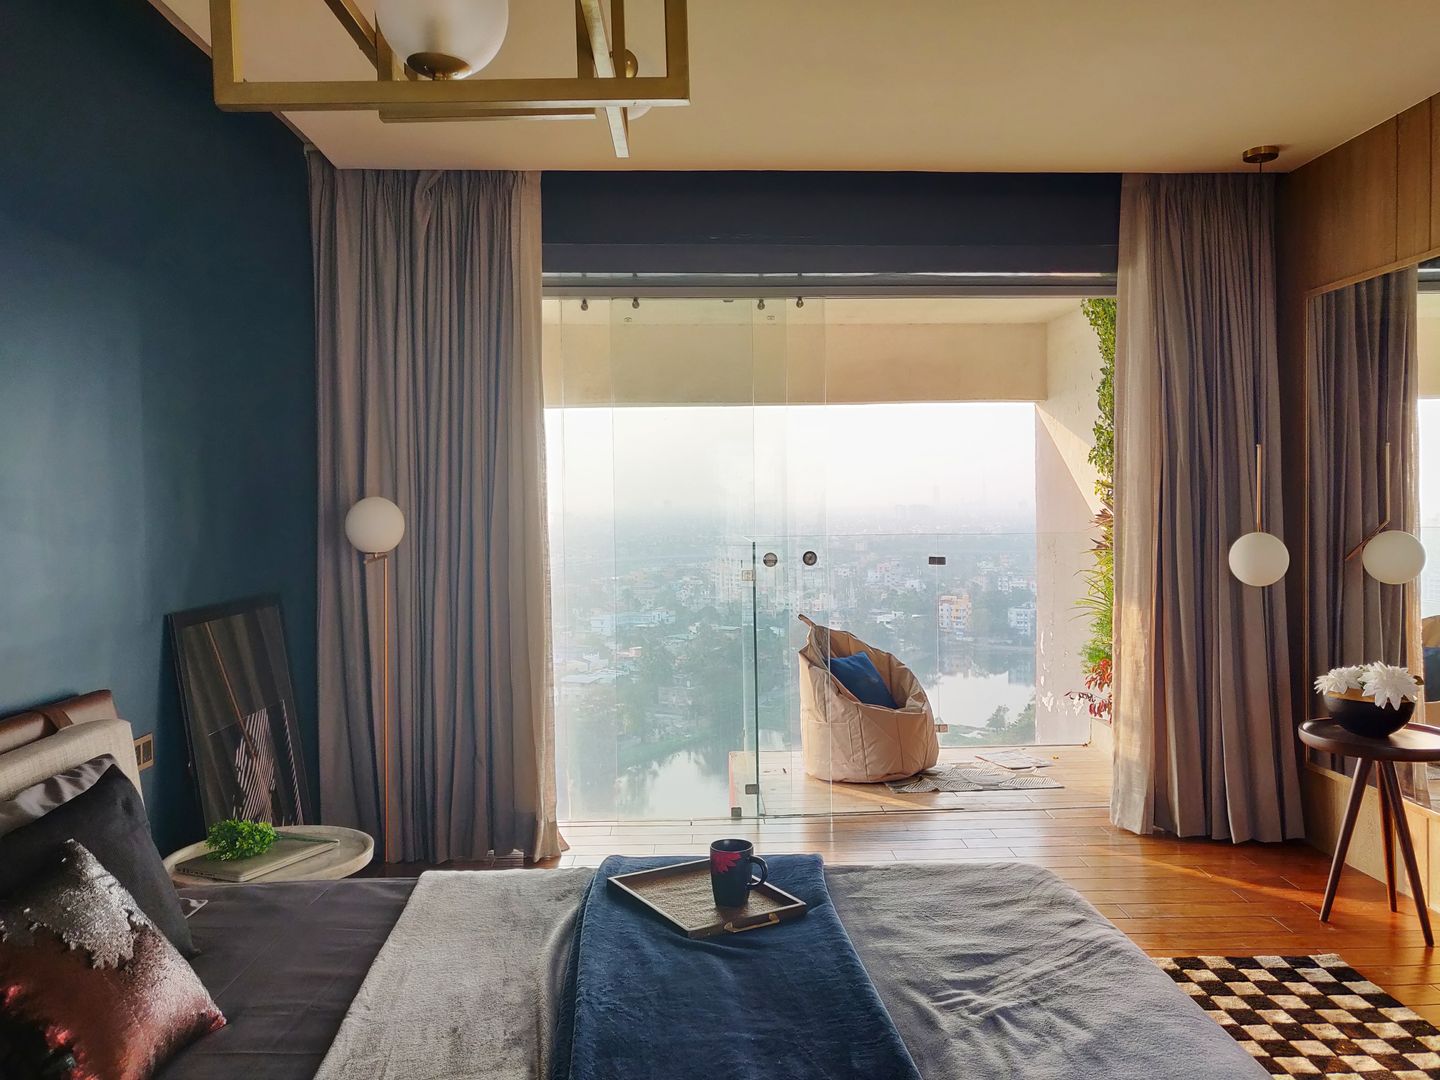 Bedroom Design, Tatvam Concepts by Sakshi Tatvam Concepts by Sakshi Minimalist bedroom Furniture,Comfort,Wood,Curtain,Interior design,Shade,Flooring,Building,Floor,Decoration